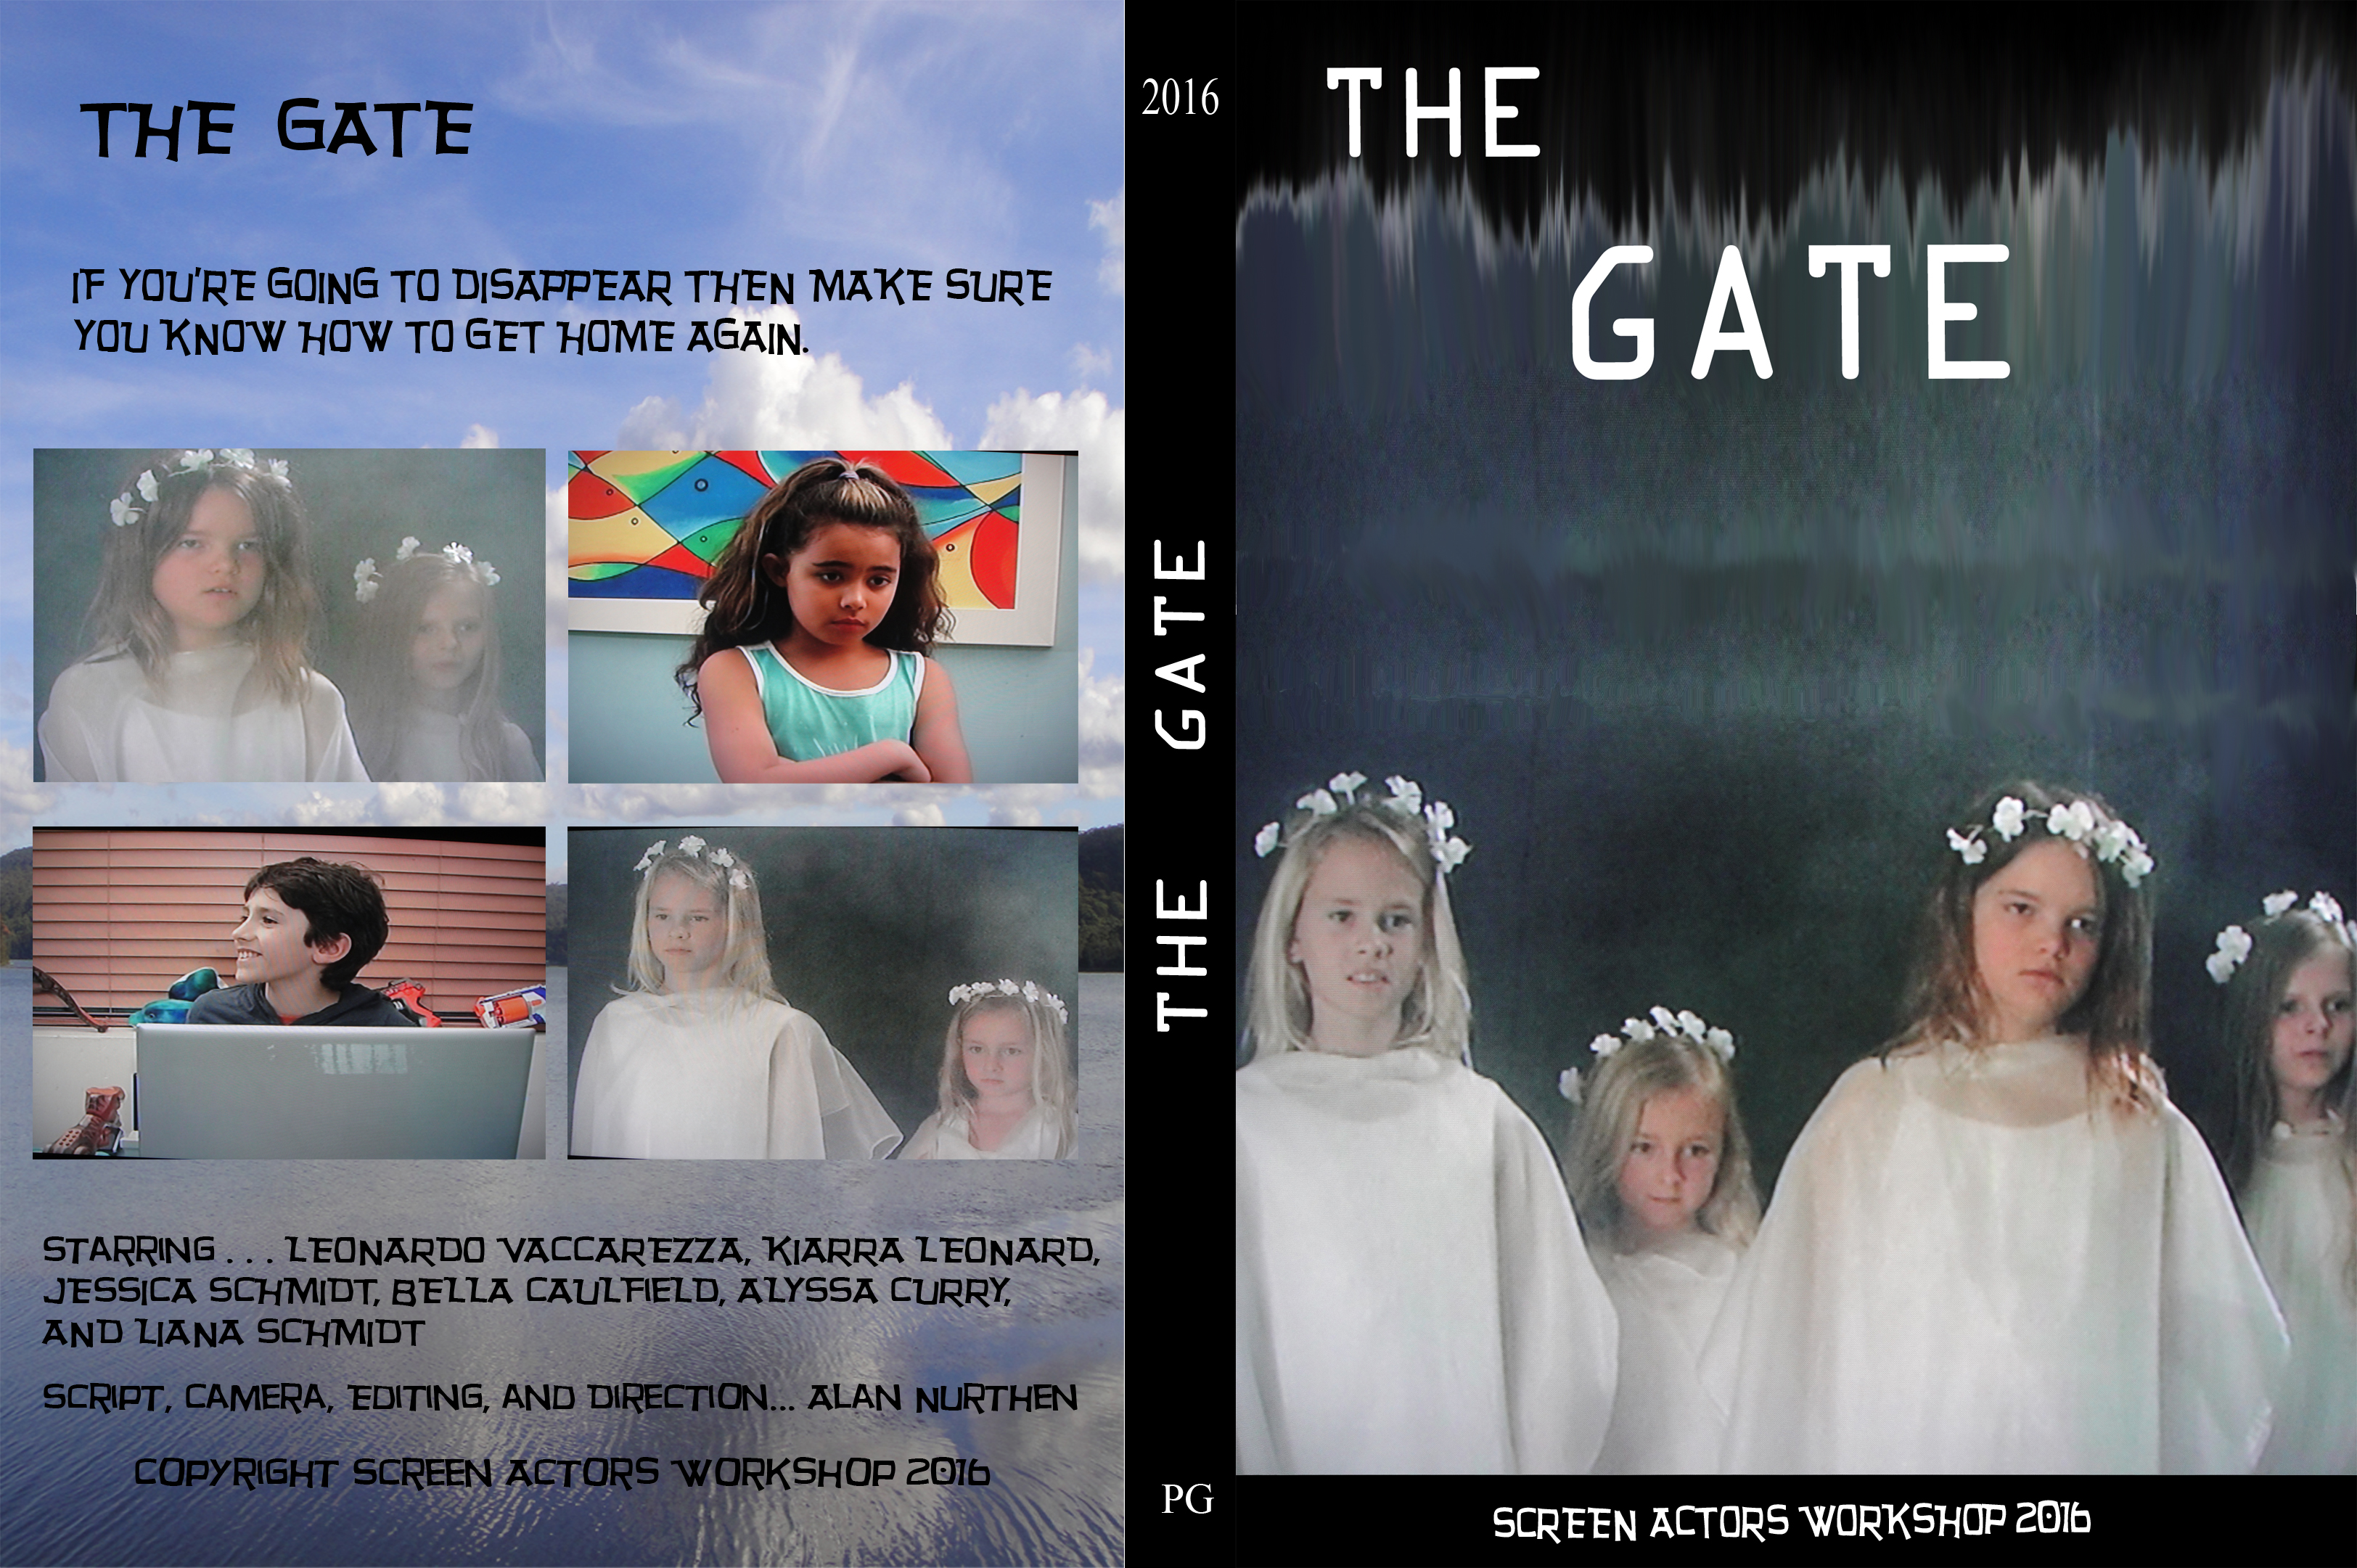 The Gate DVD slick